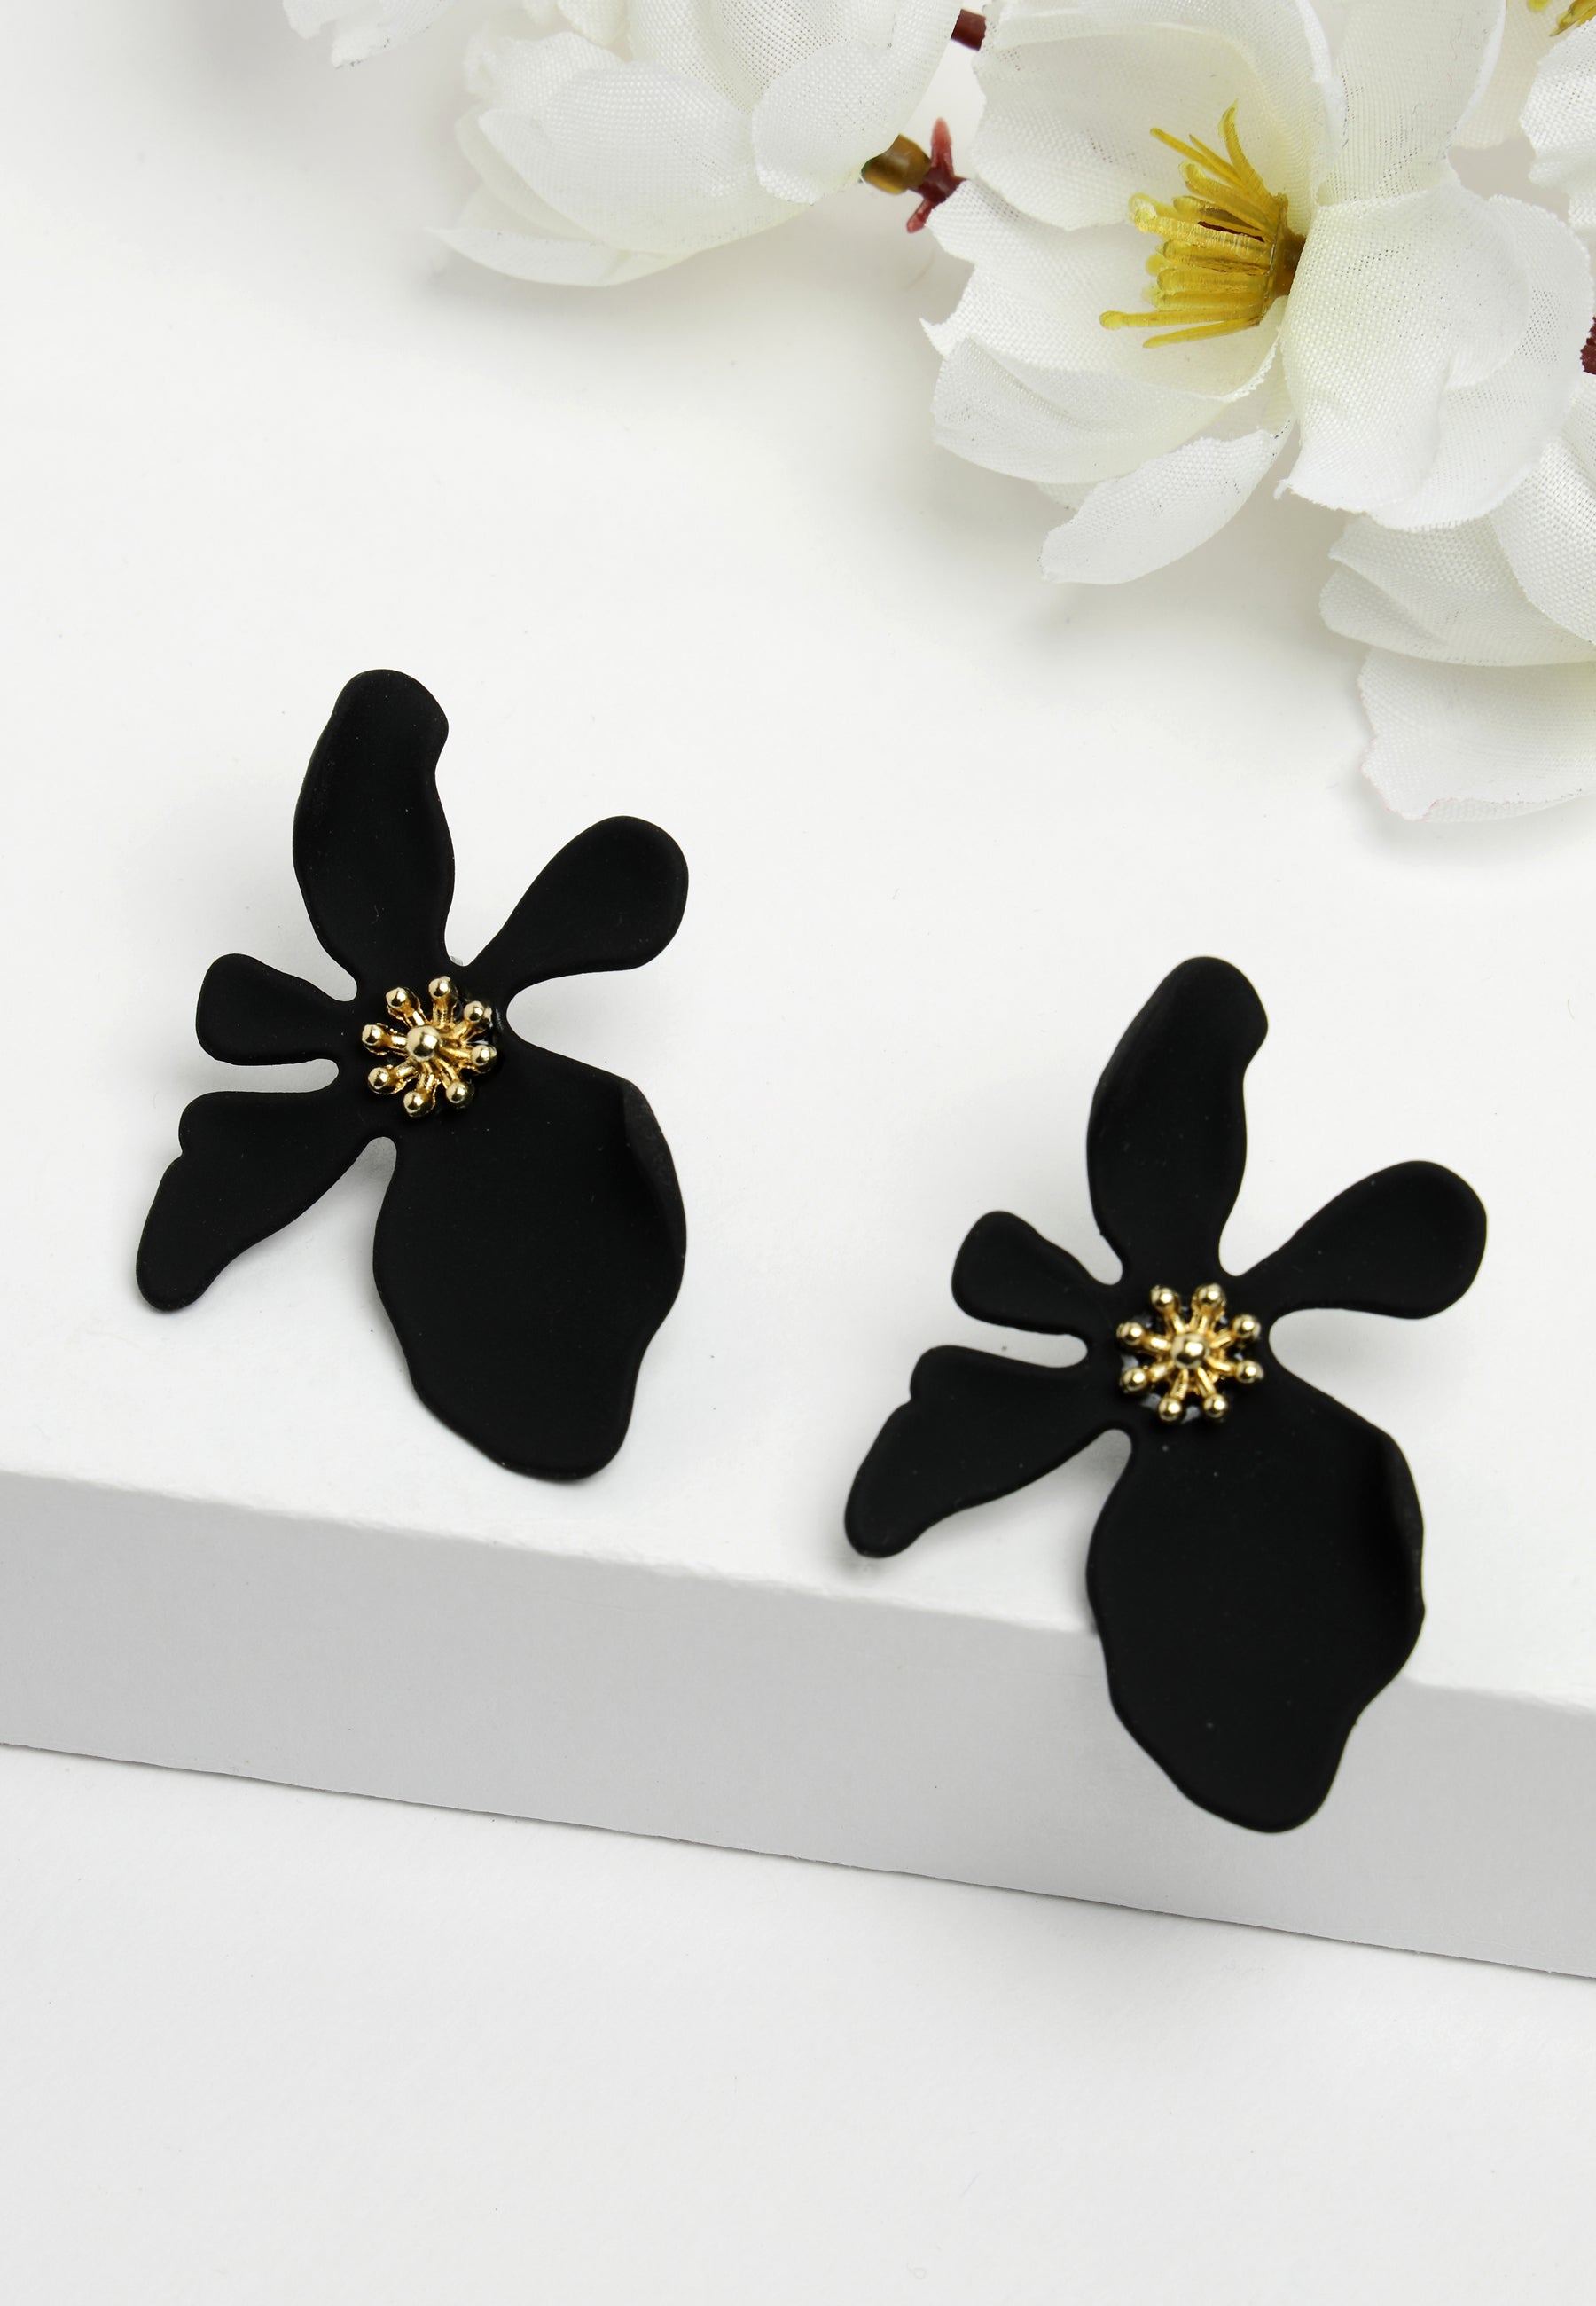 Avant-Garde Paris Beautifully Crafted Floral Earrings